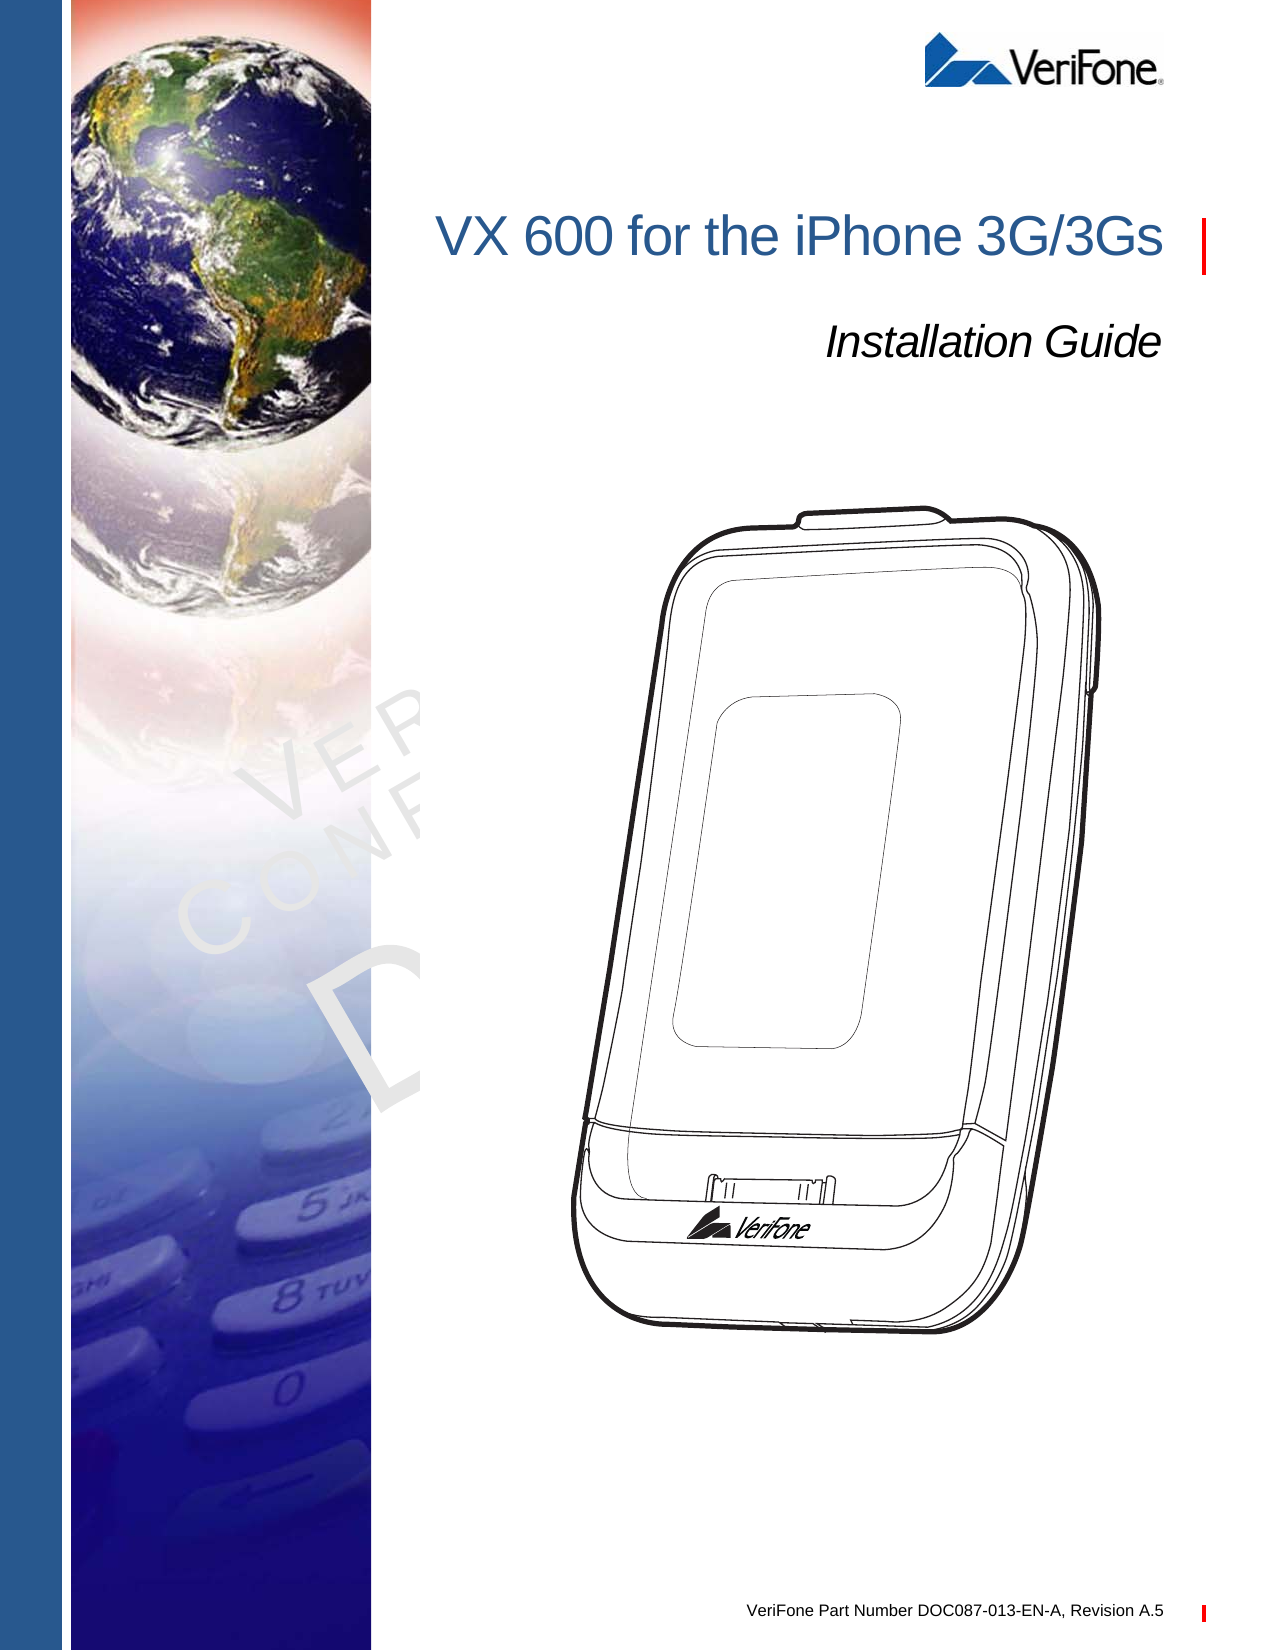 VeriFone Part Number DOC087-013-EN-A, Revision A.5VERIFONECONFIDENTIALREVISION A.5 VX 600 for the iPhone 3G/3GsInstallation Guide